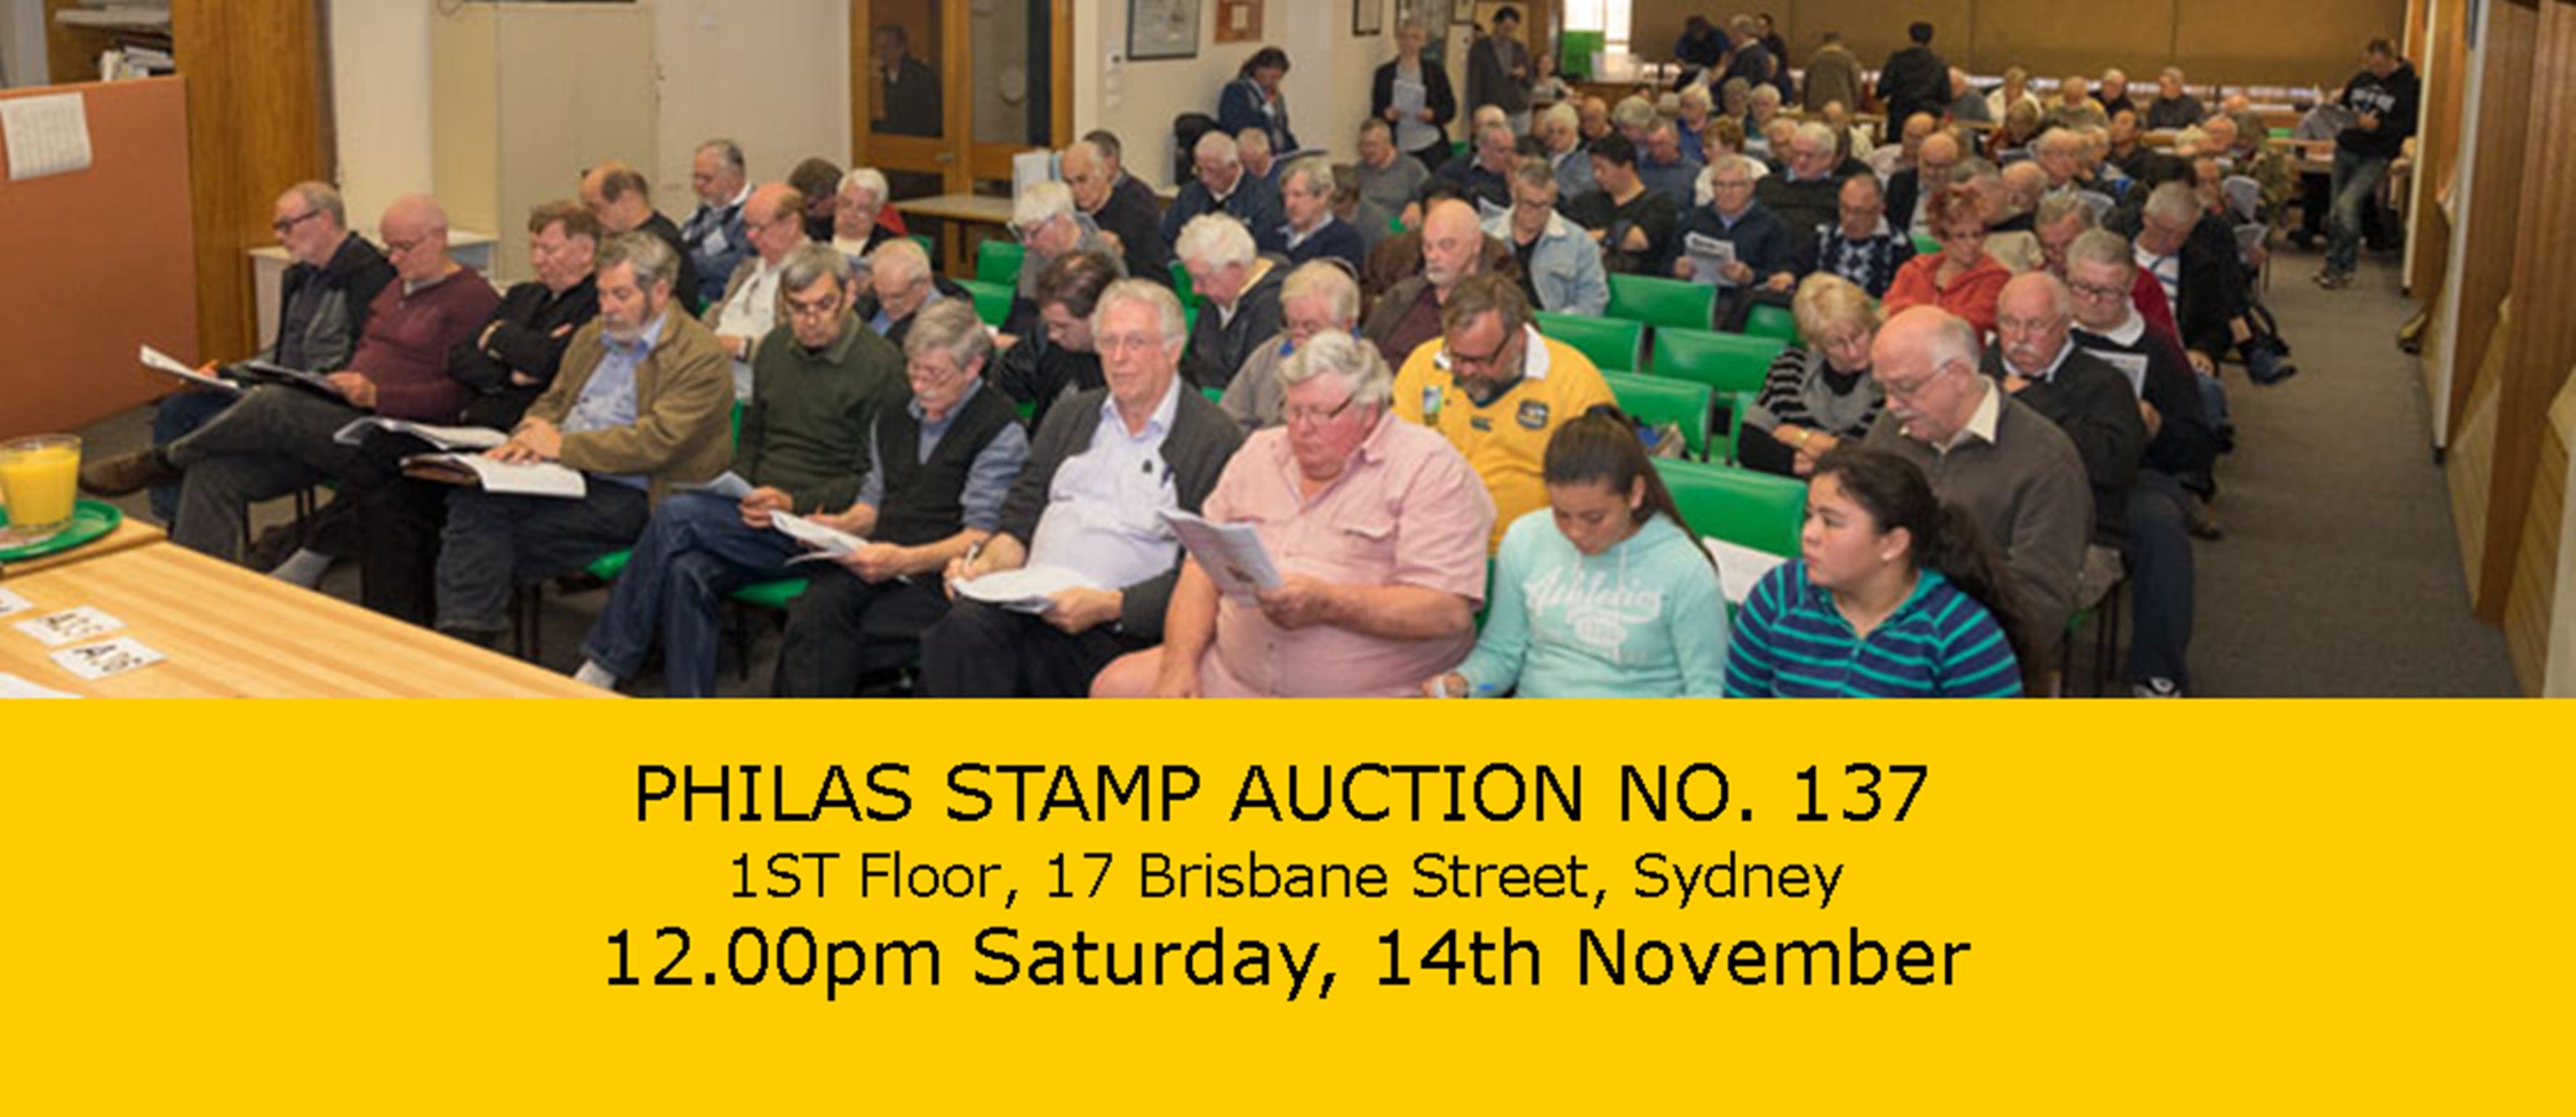 PHILAS Stamp Auction No. 137 - Grafton Accommodation